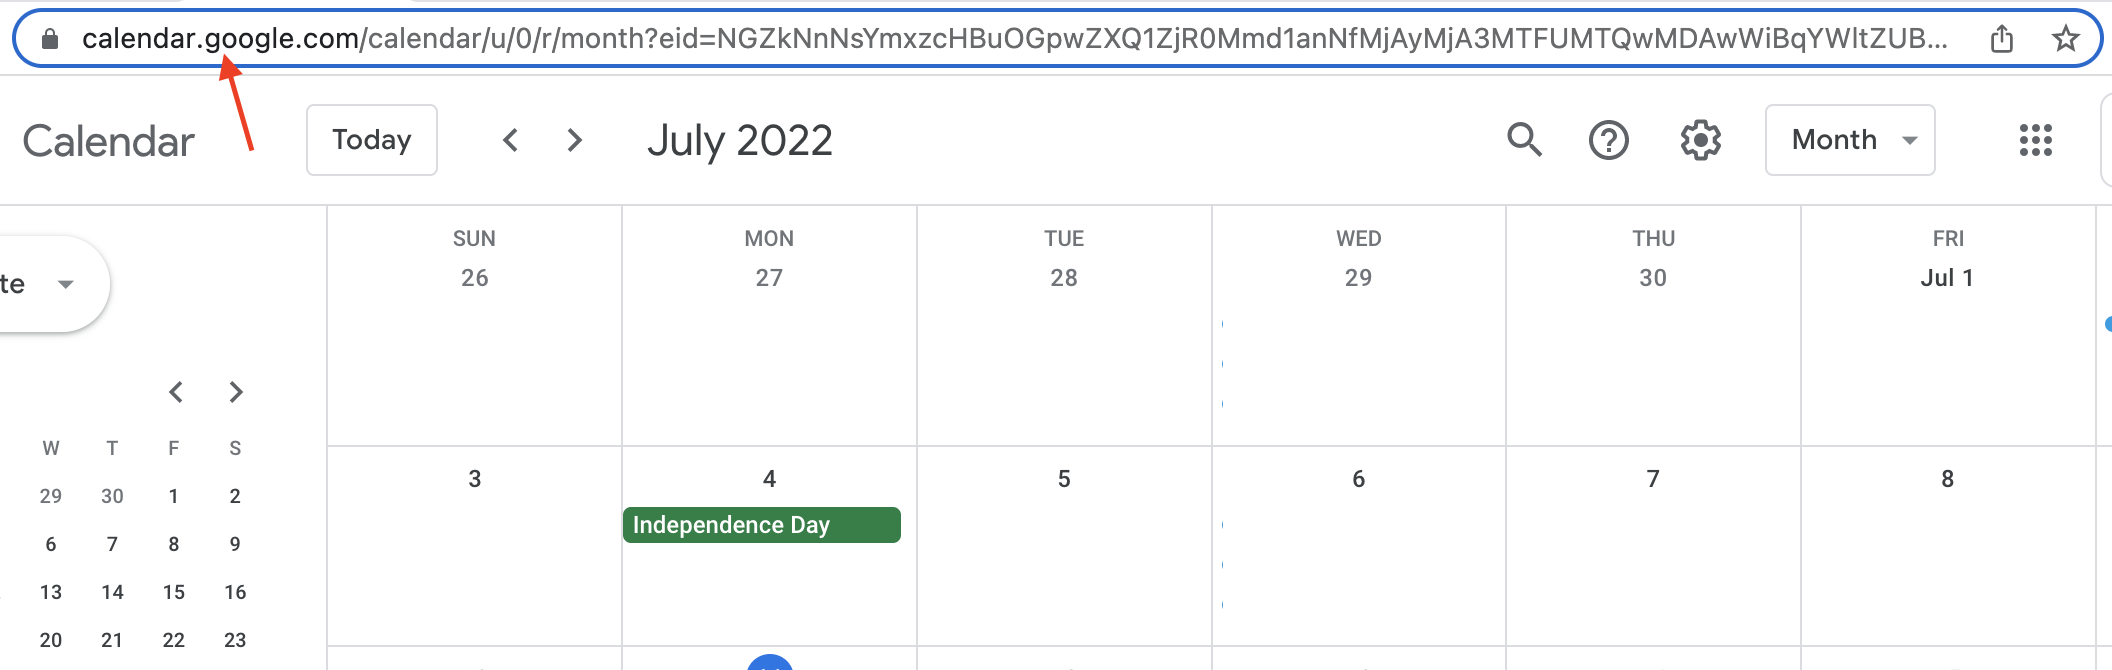 Full Google Calendar event URL